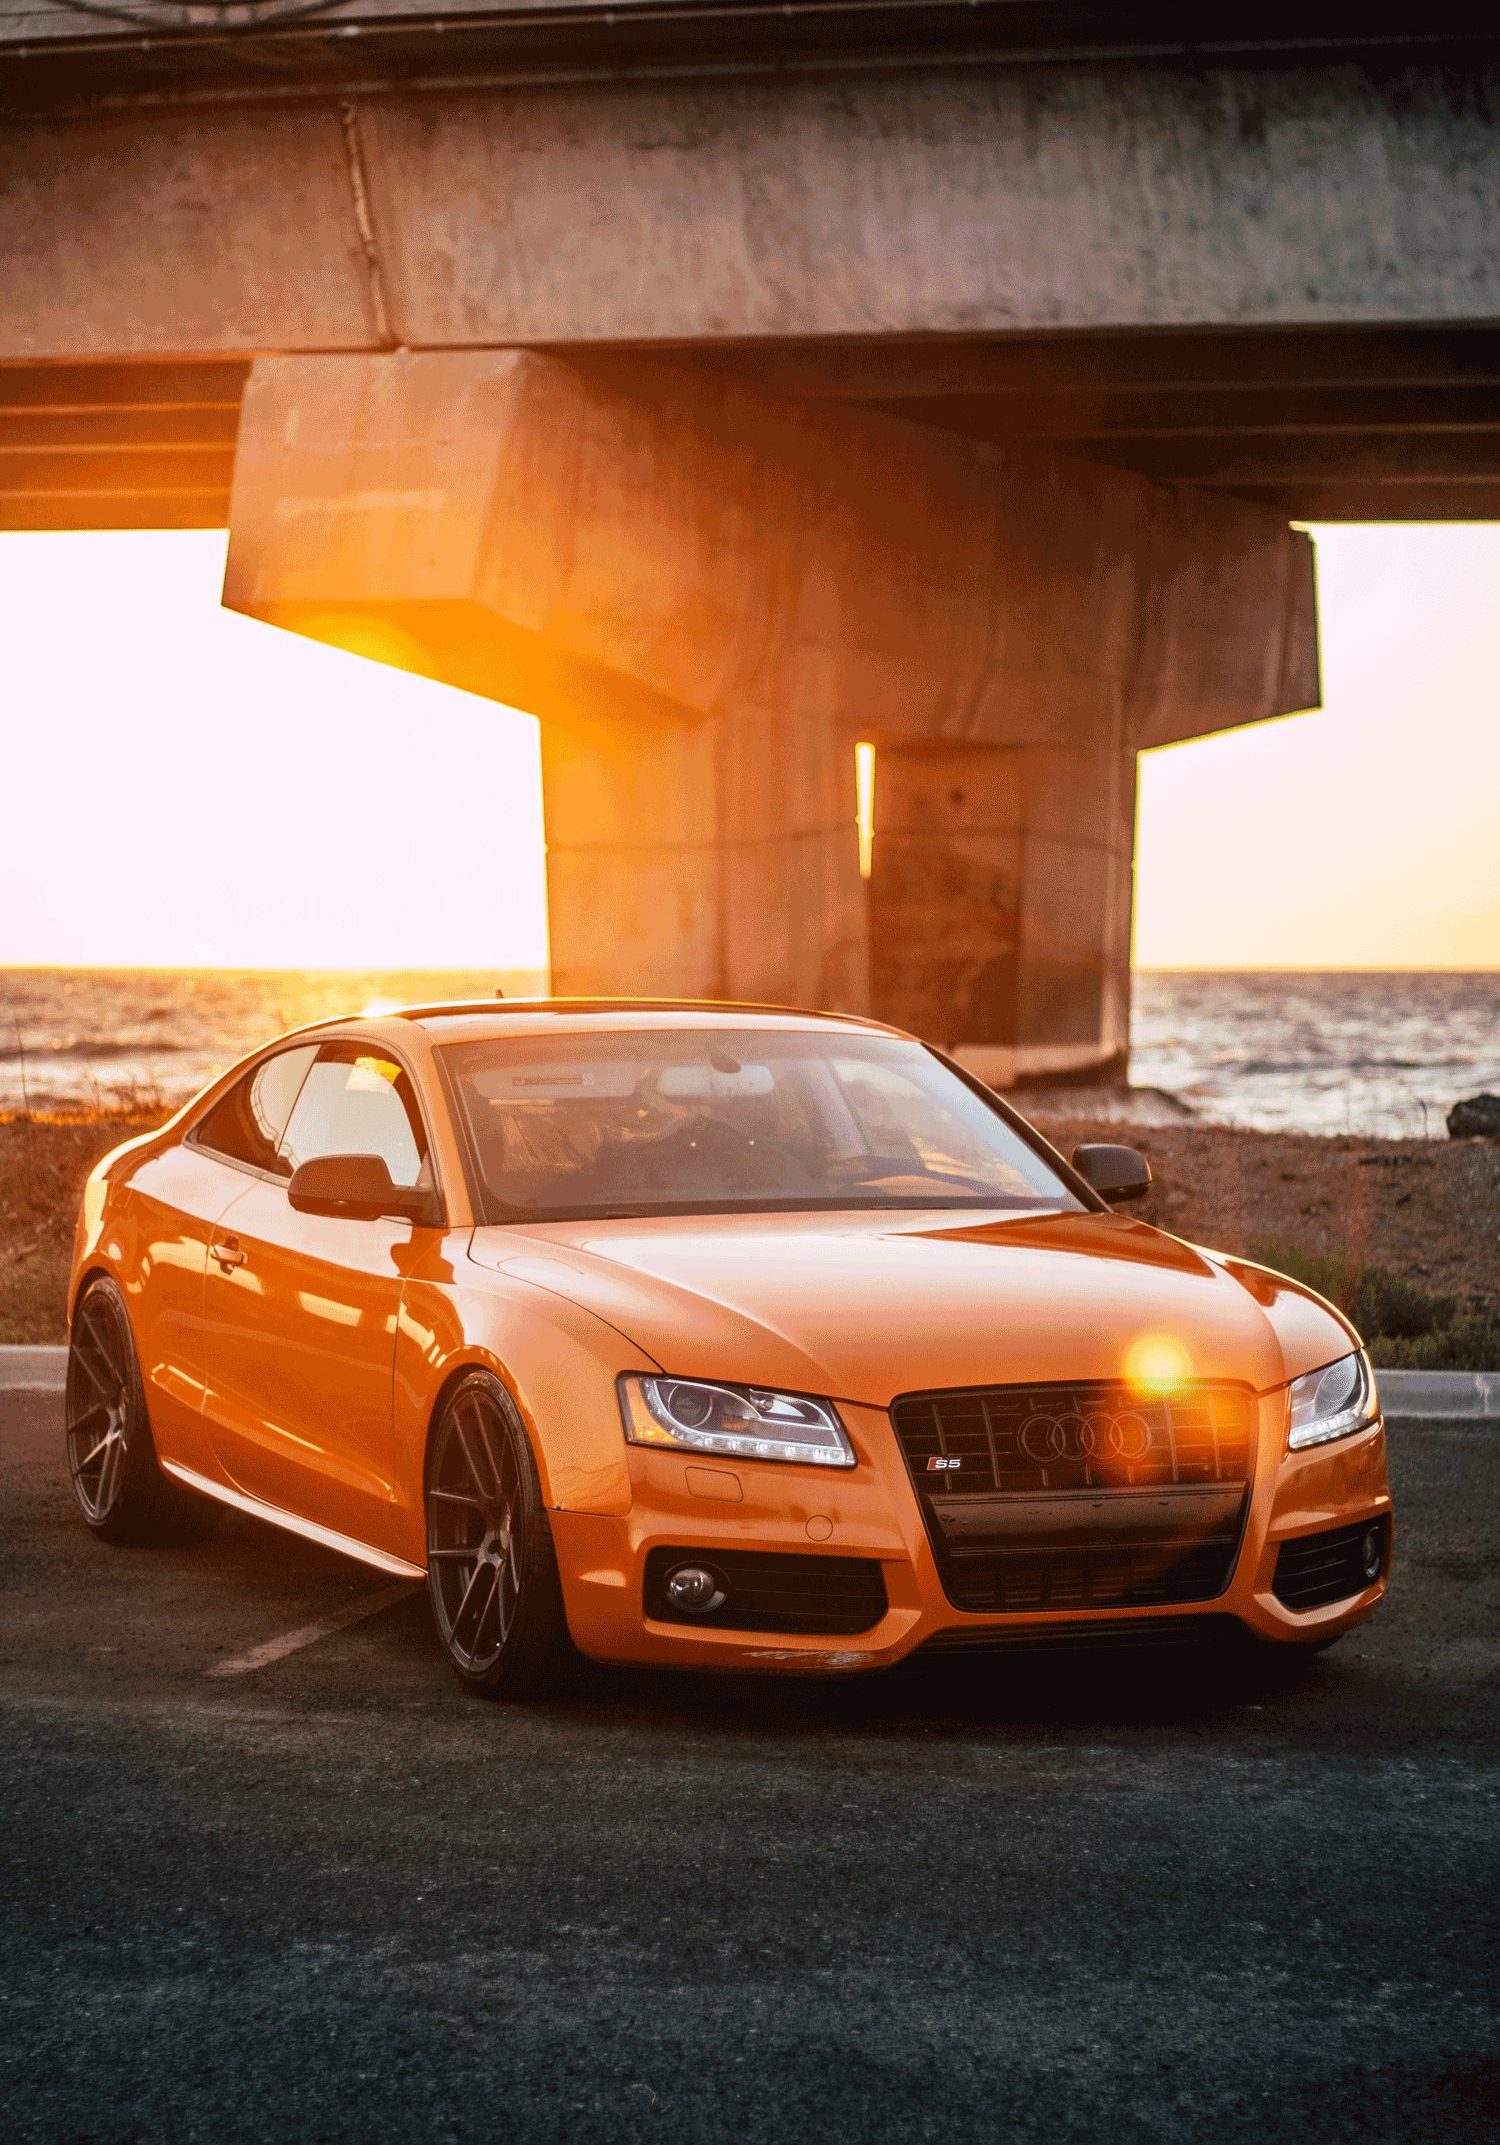 Audi-Sunset